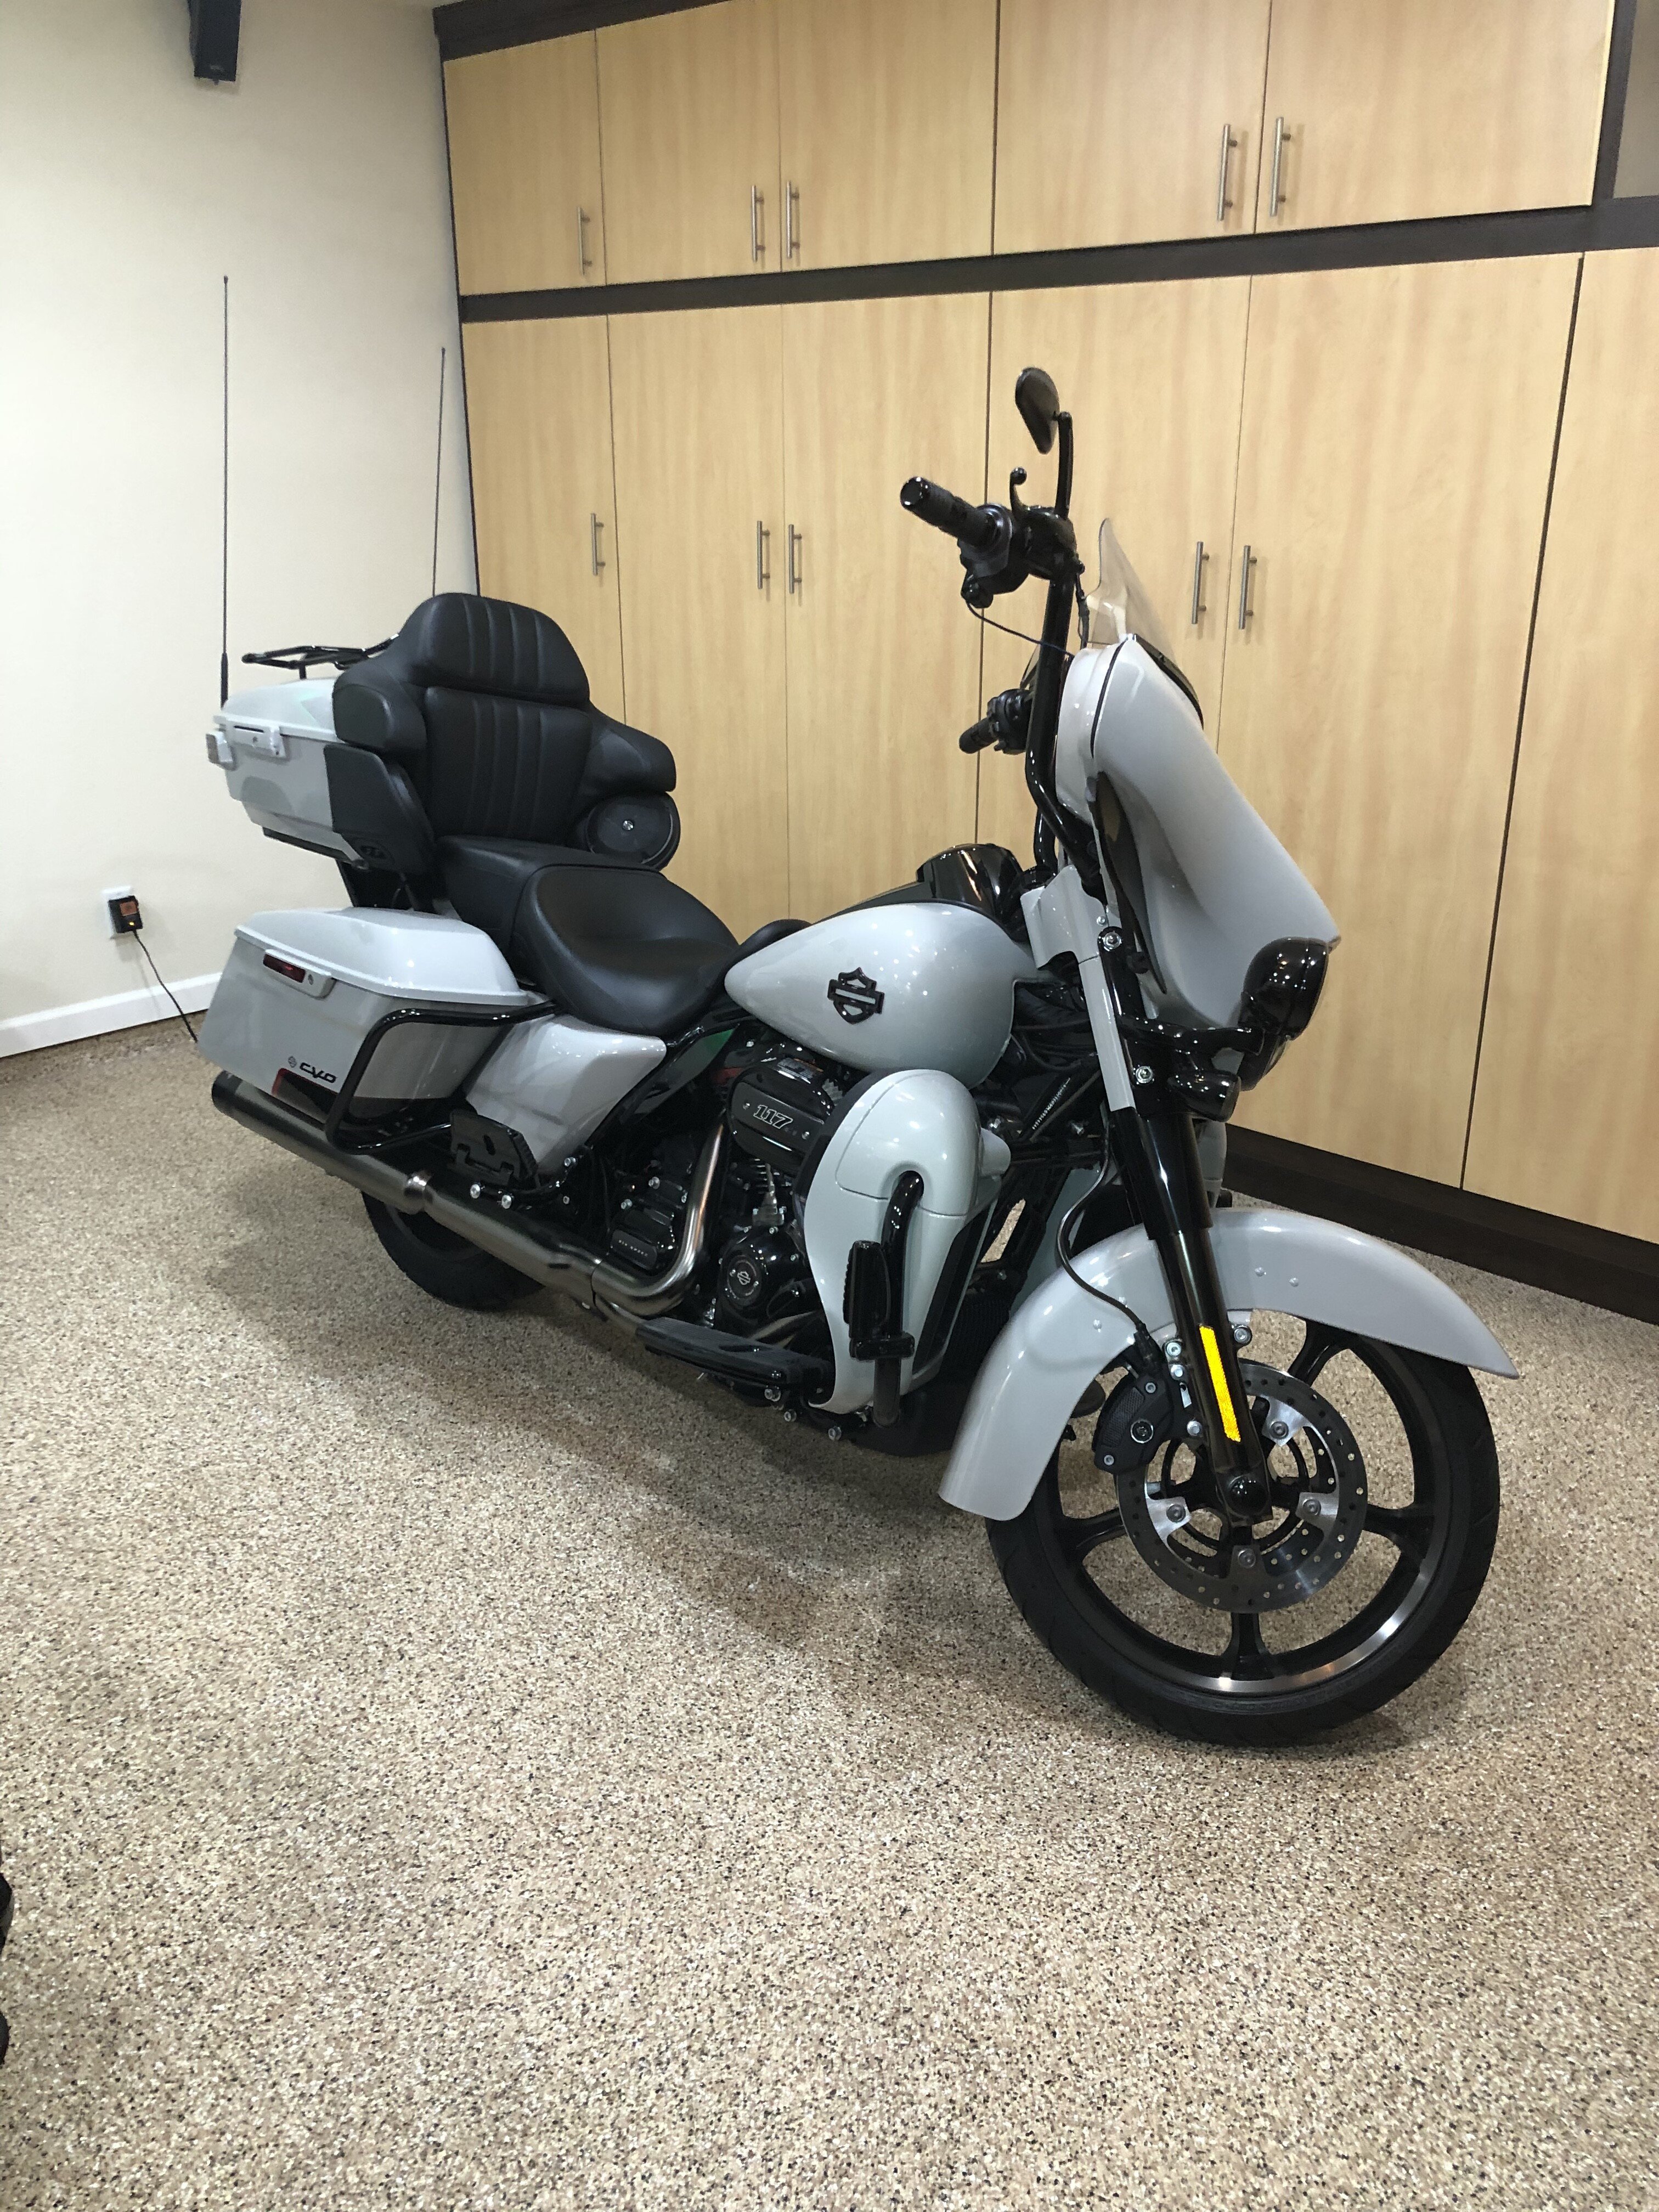 2020 Harley Davidson Cvo Limited For Sale Near Glendale Arizona 85302 Motorcycles On Autotrader